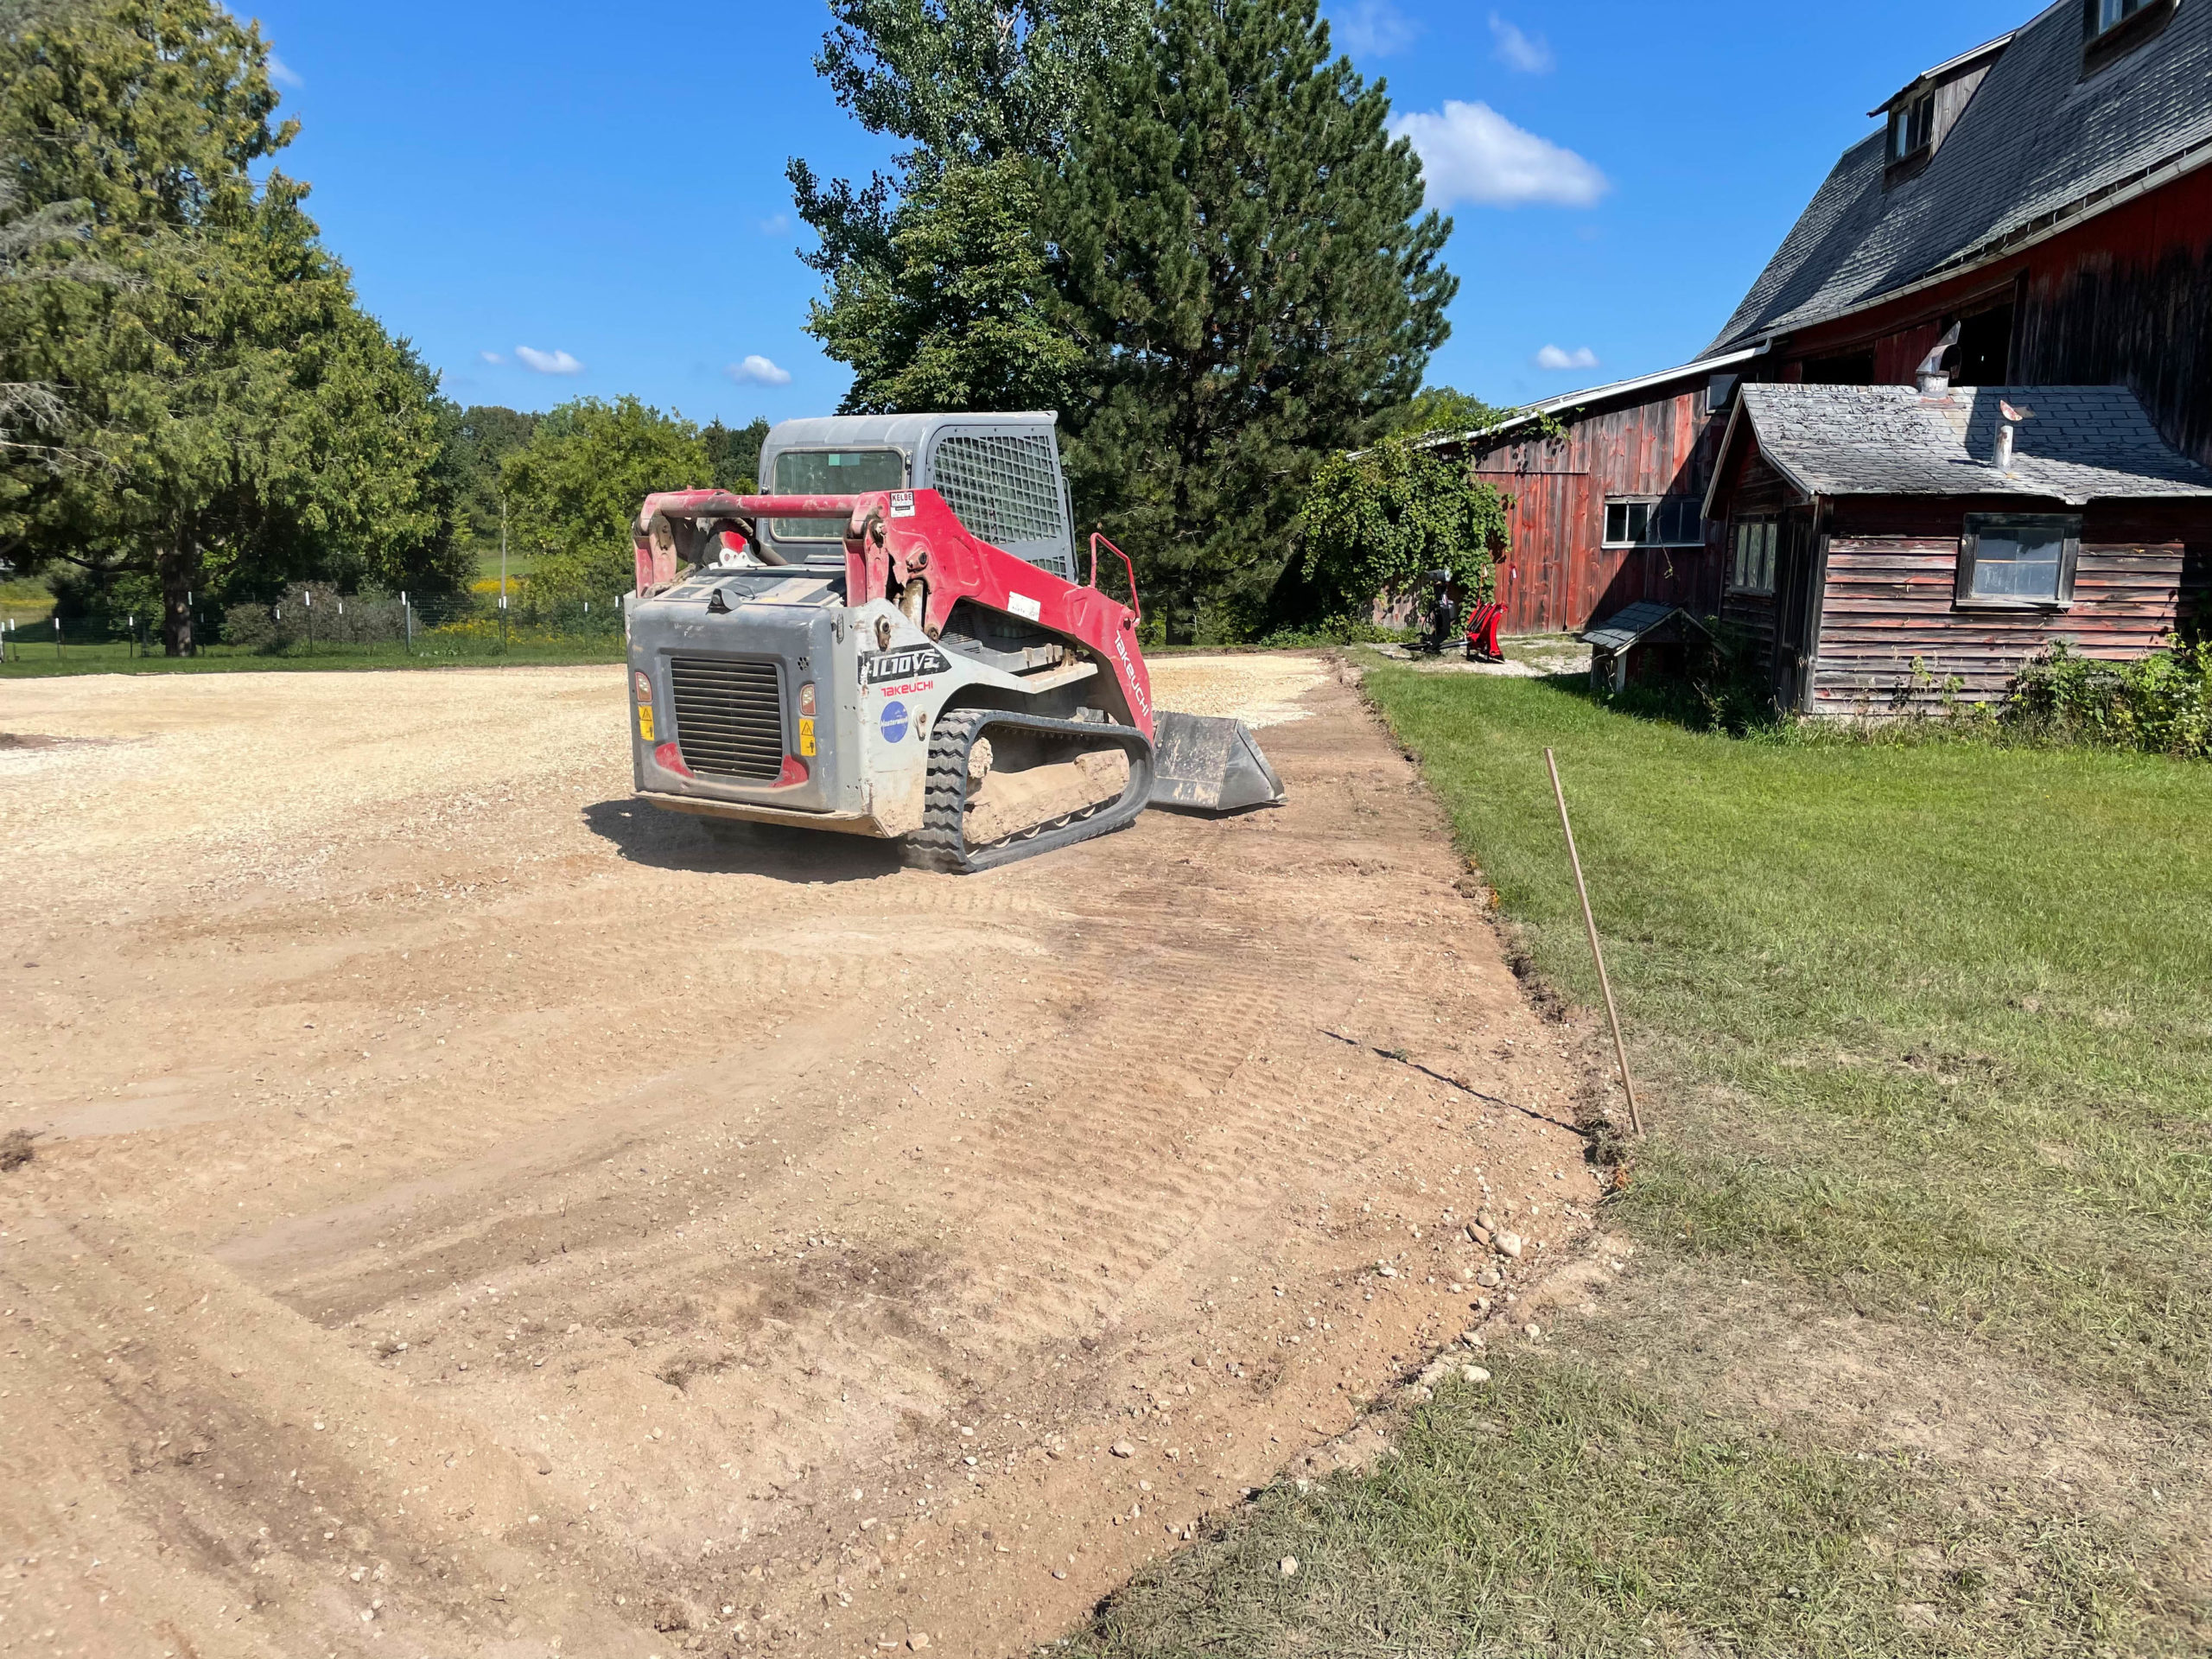 Gravel Driveway Install In Progress